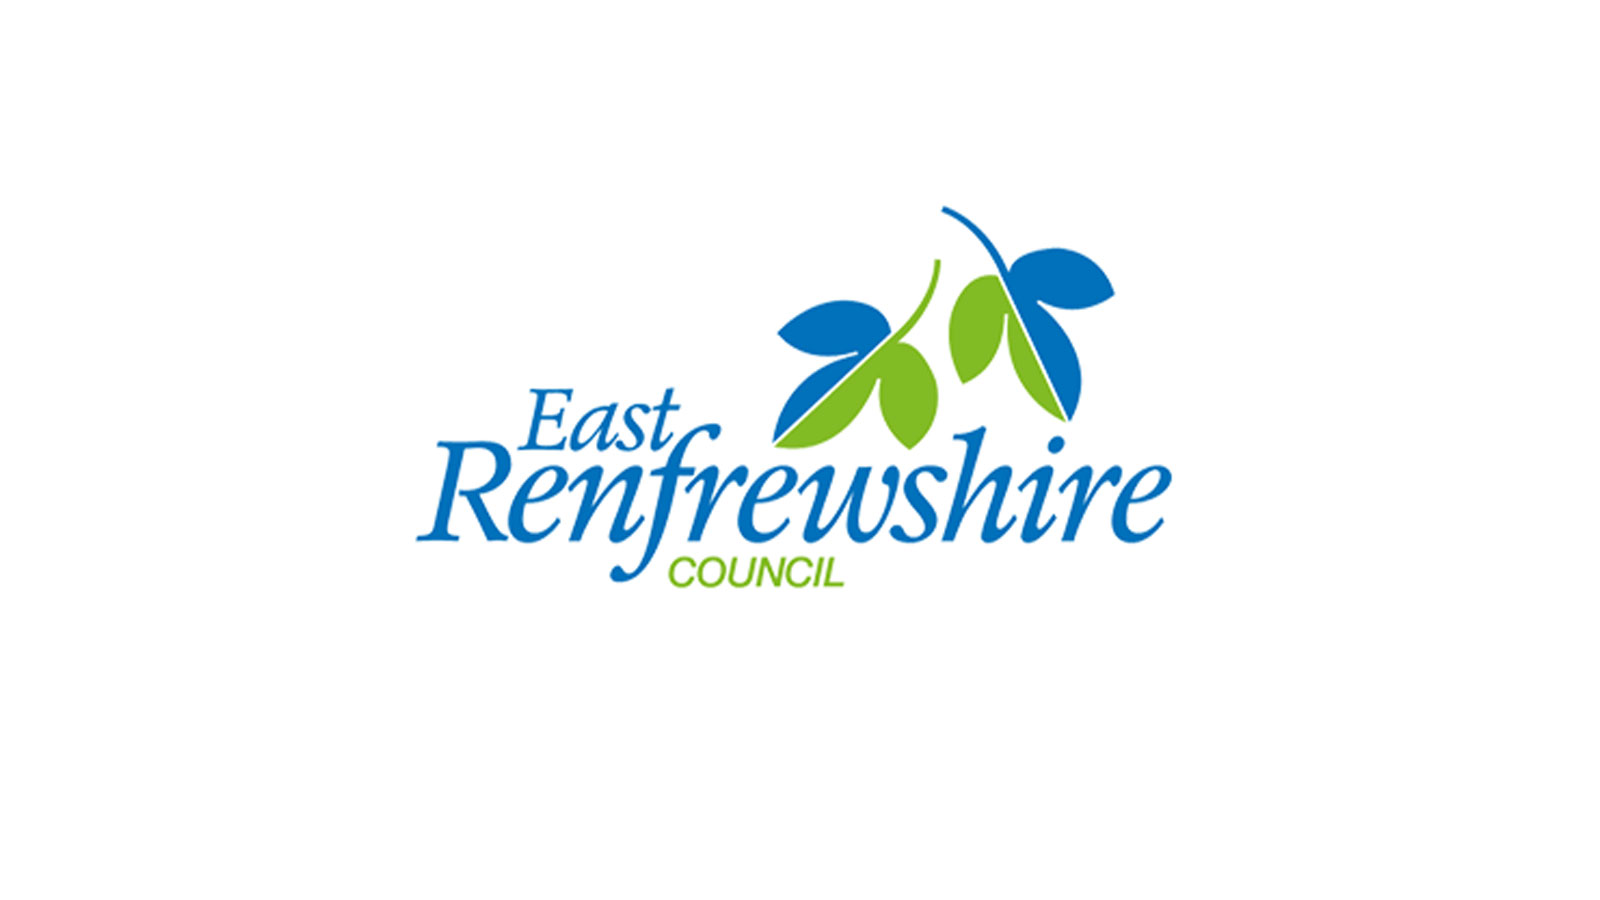  East Renfrewshire Council